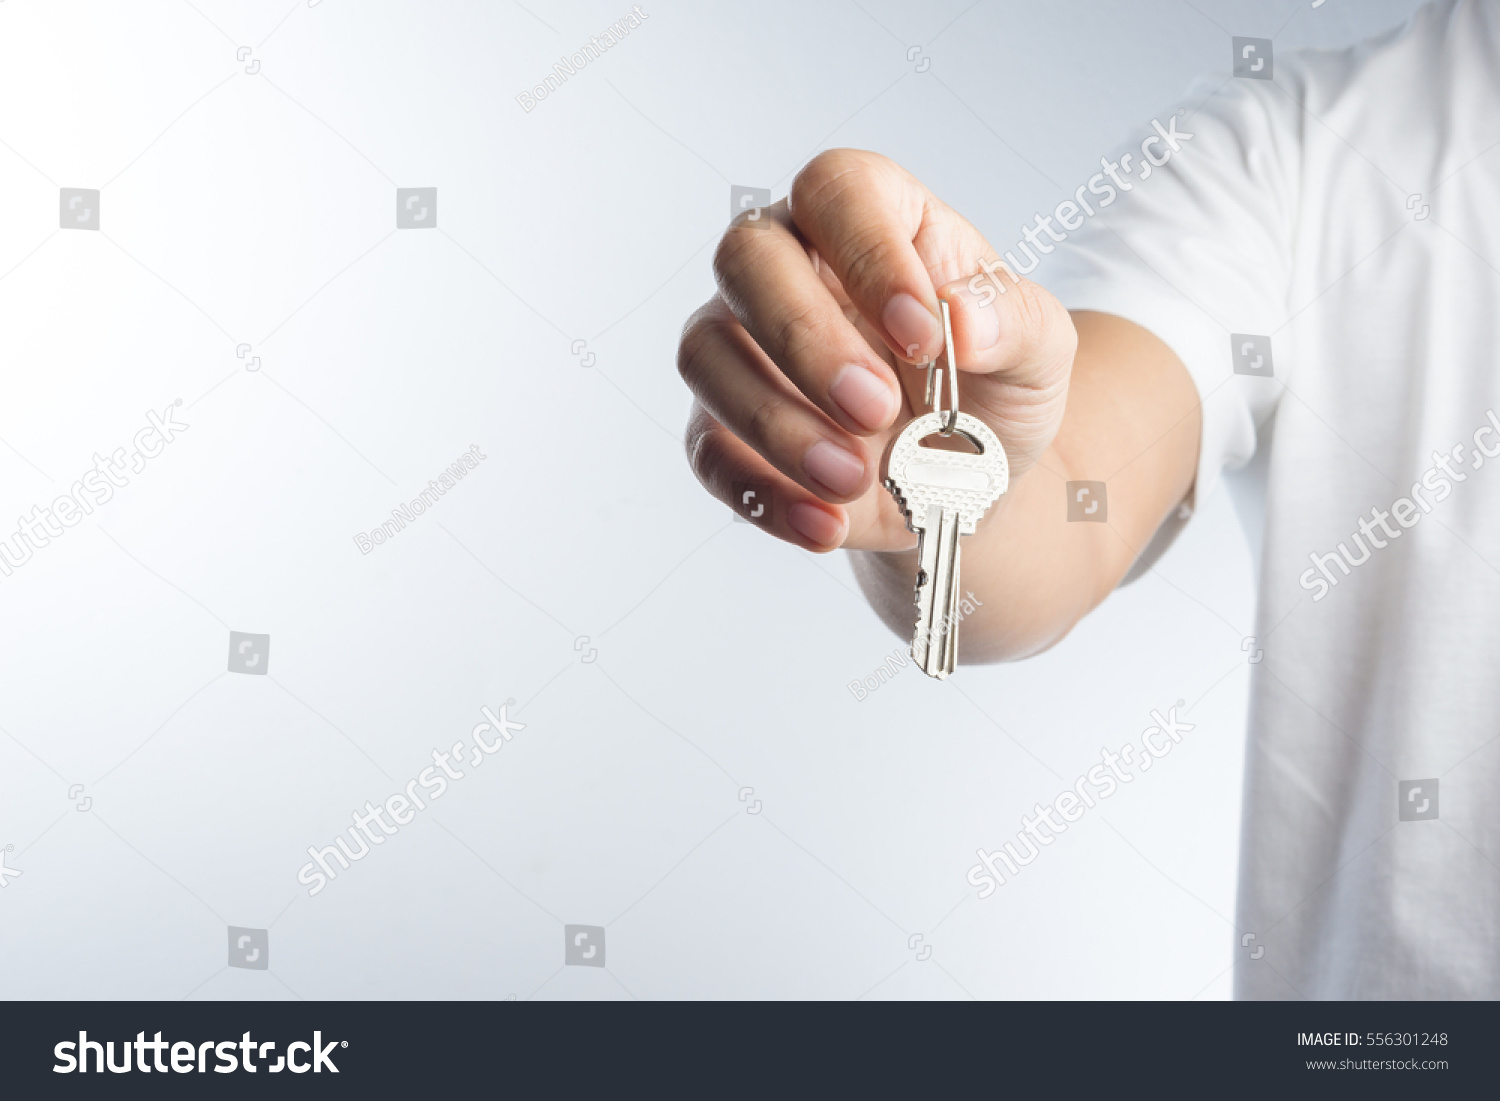 Hand giving keys on white background #556301248